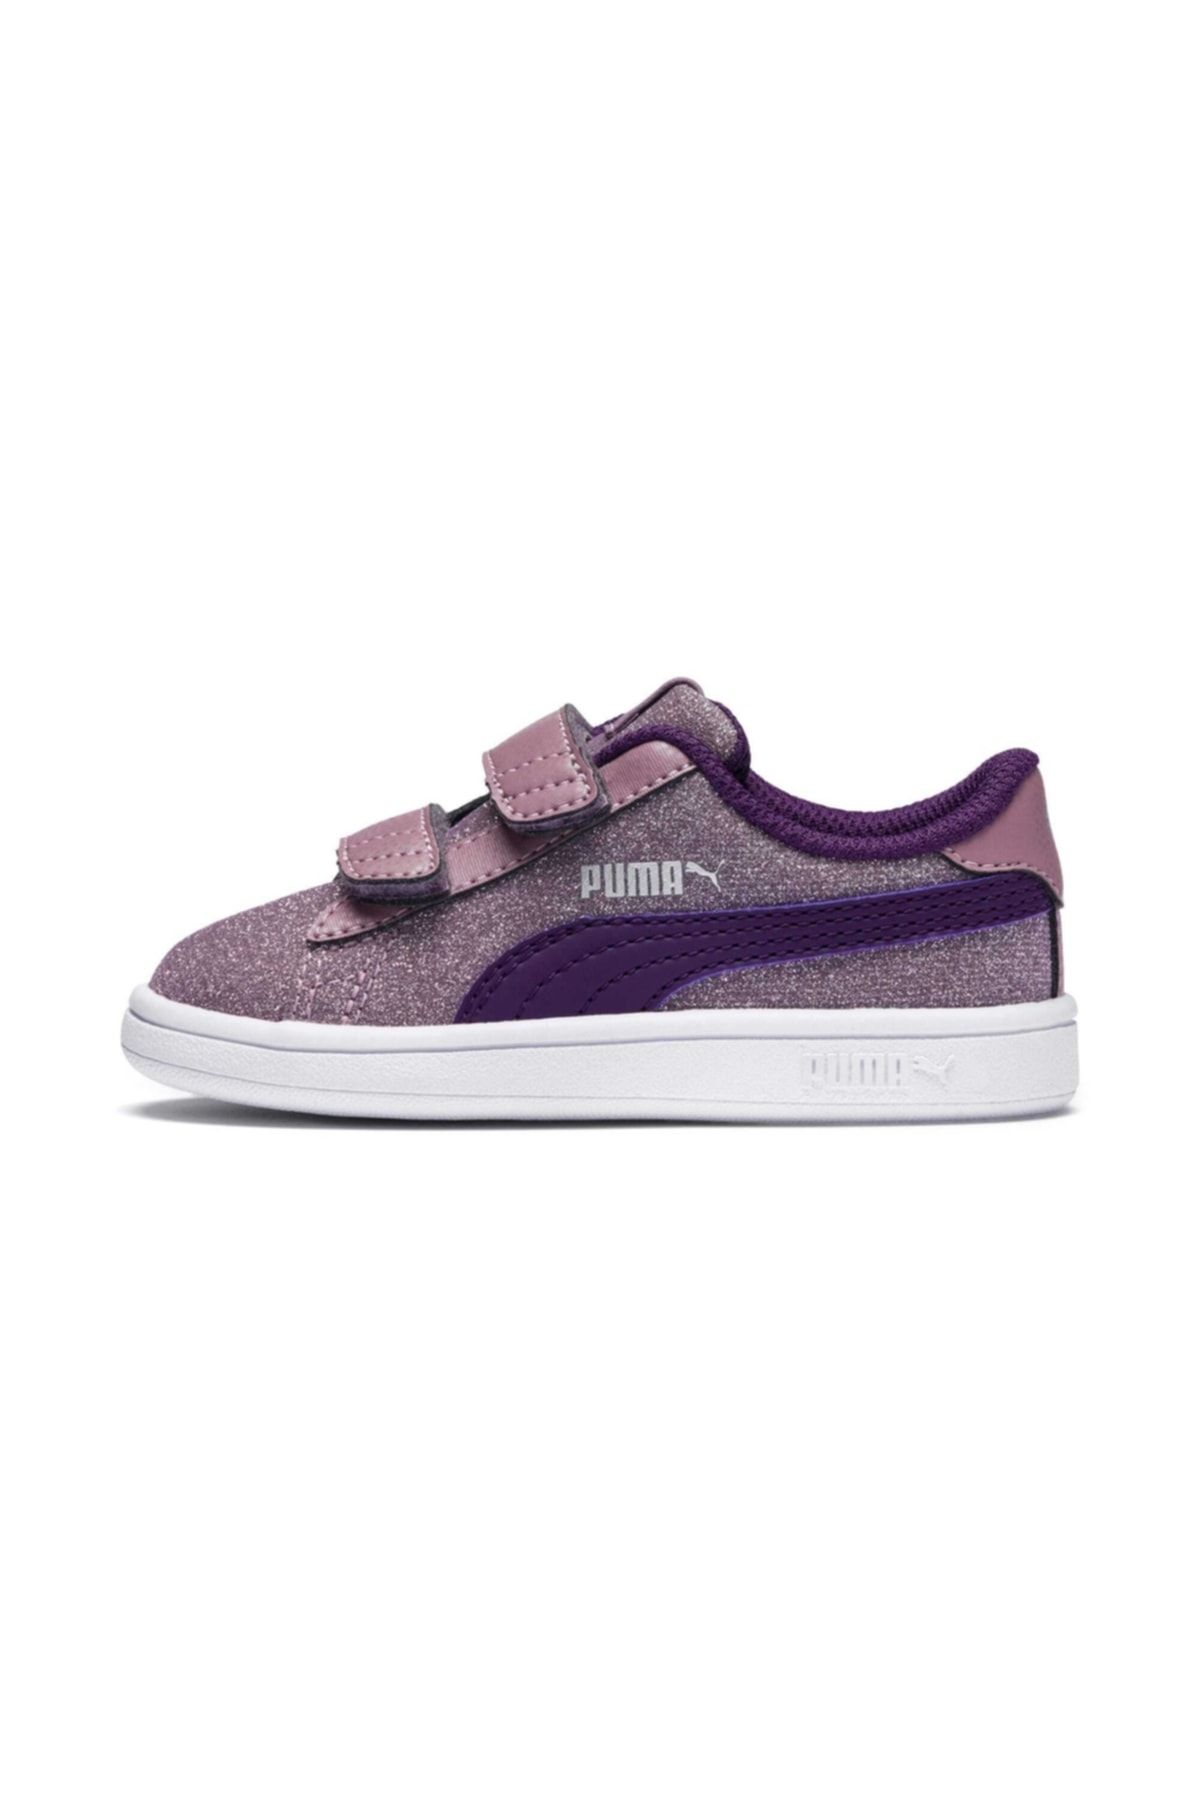 Puma Puma Smash V2 Glitz Glam İndigo Gri Kız Çocuk Sneaker Ayakkabı 100415321